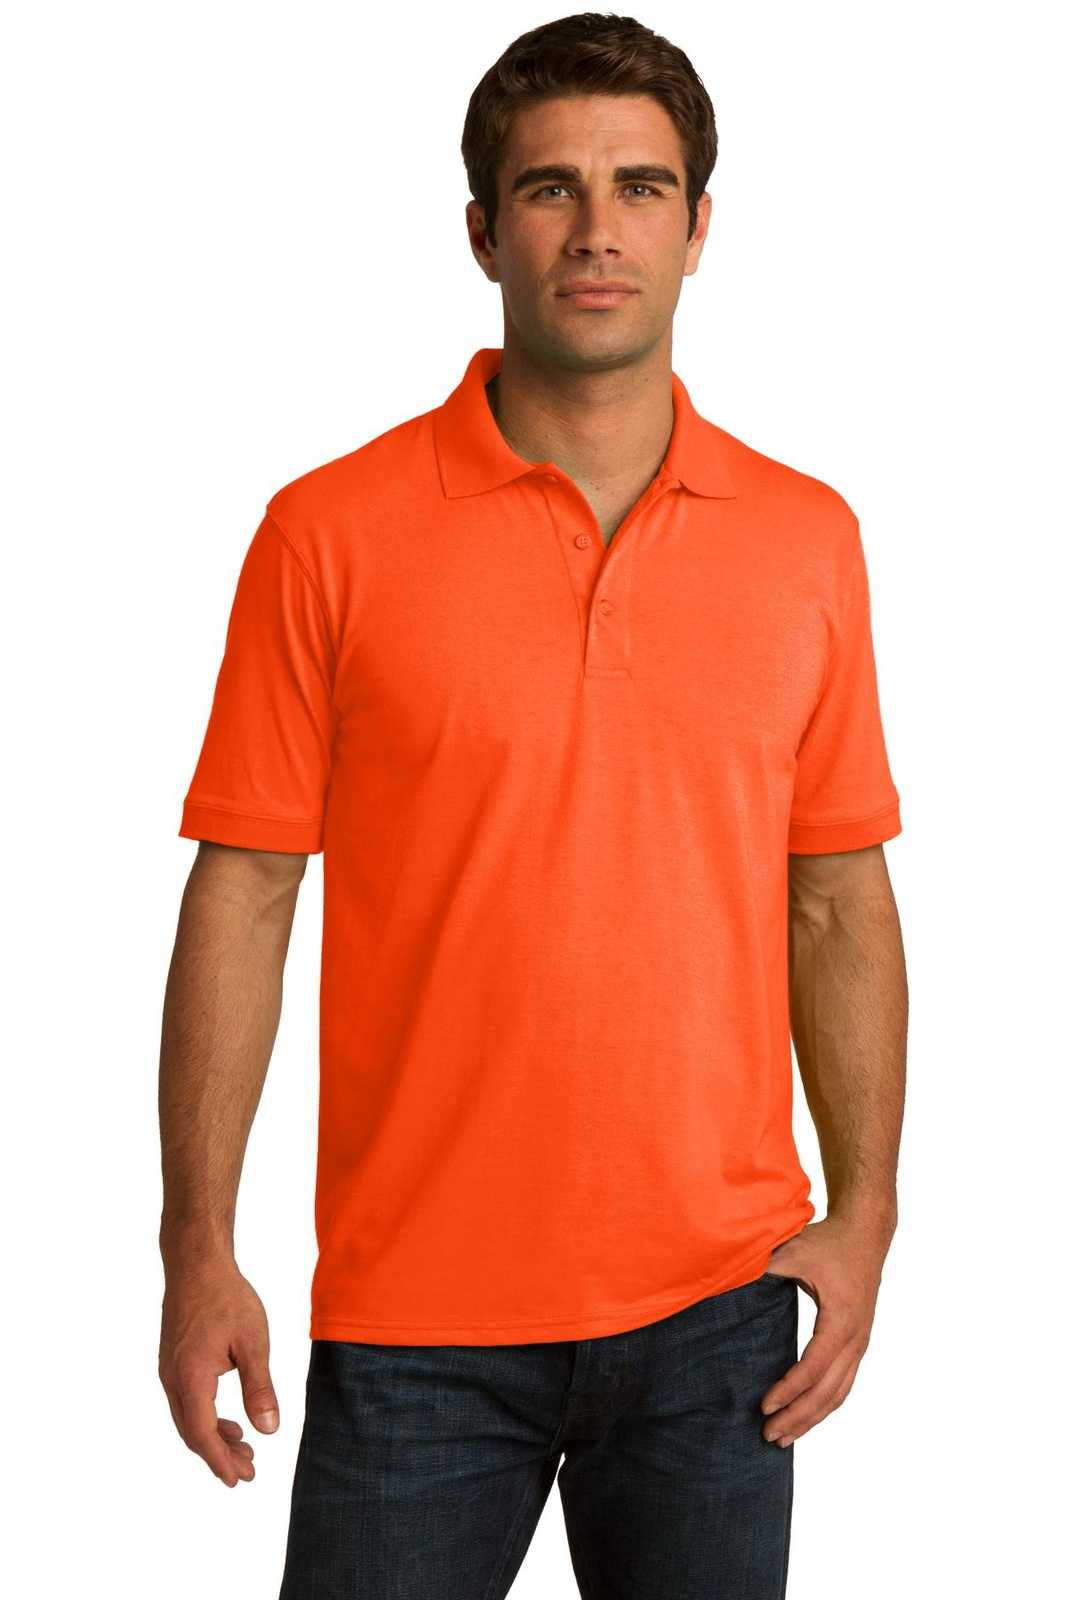 Port & Company KP55 Core Blend Jersey Knit Polo - Safety Orange - HIT a Double - 1